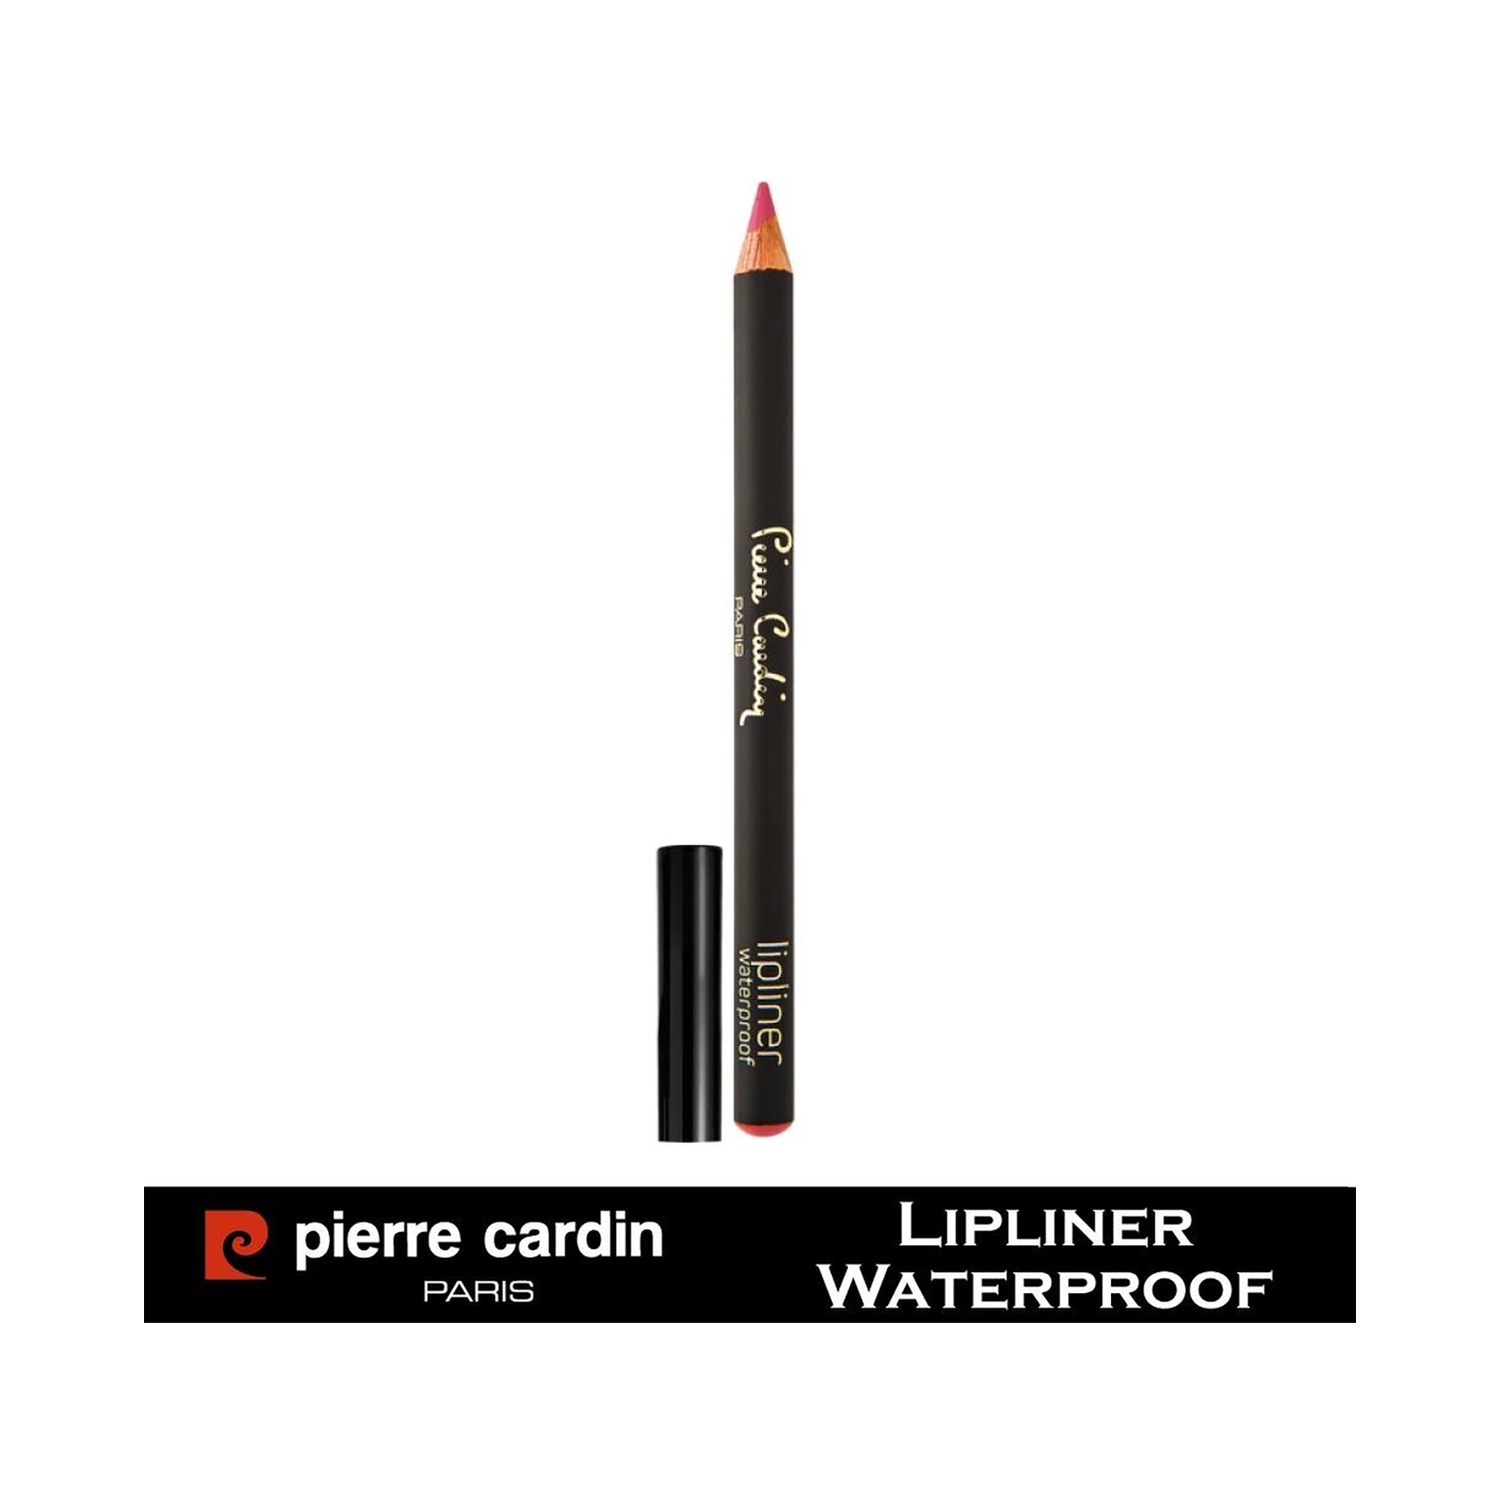 Pierre Cardin Paris | Pierre Cardin Paris Waterproof Lip Liner Pencil - 605 Sweet Pink (0.4g)